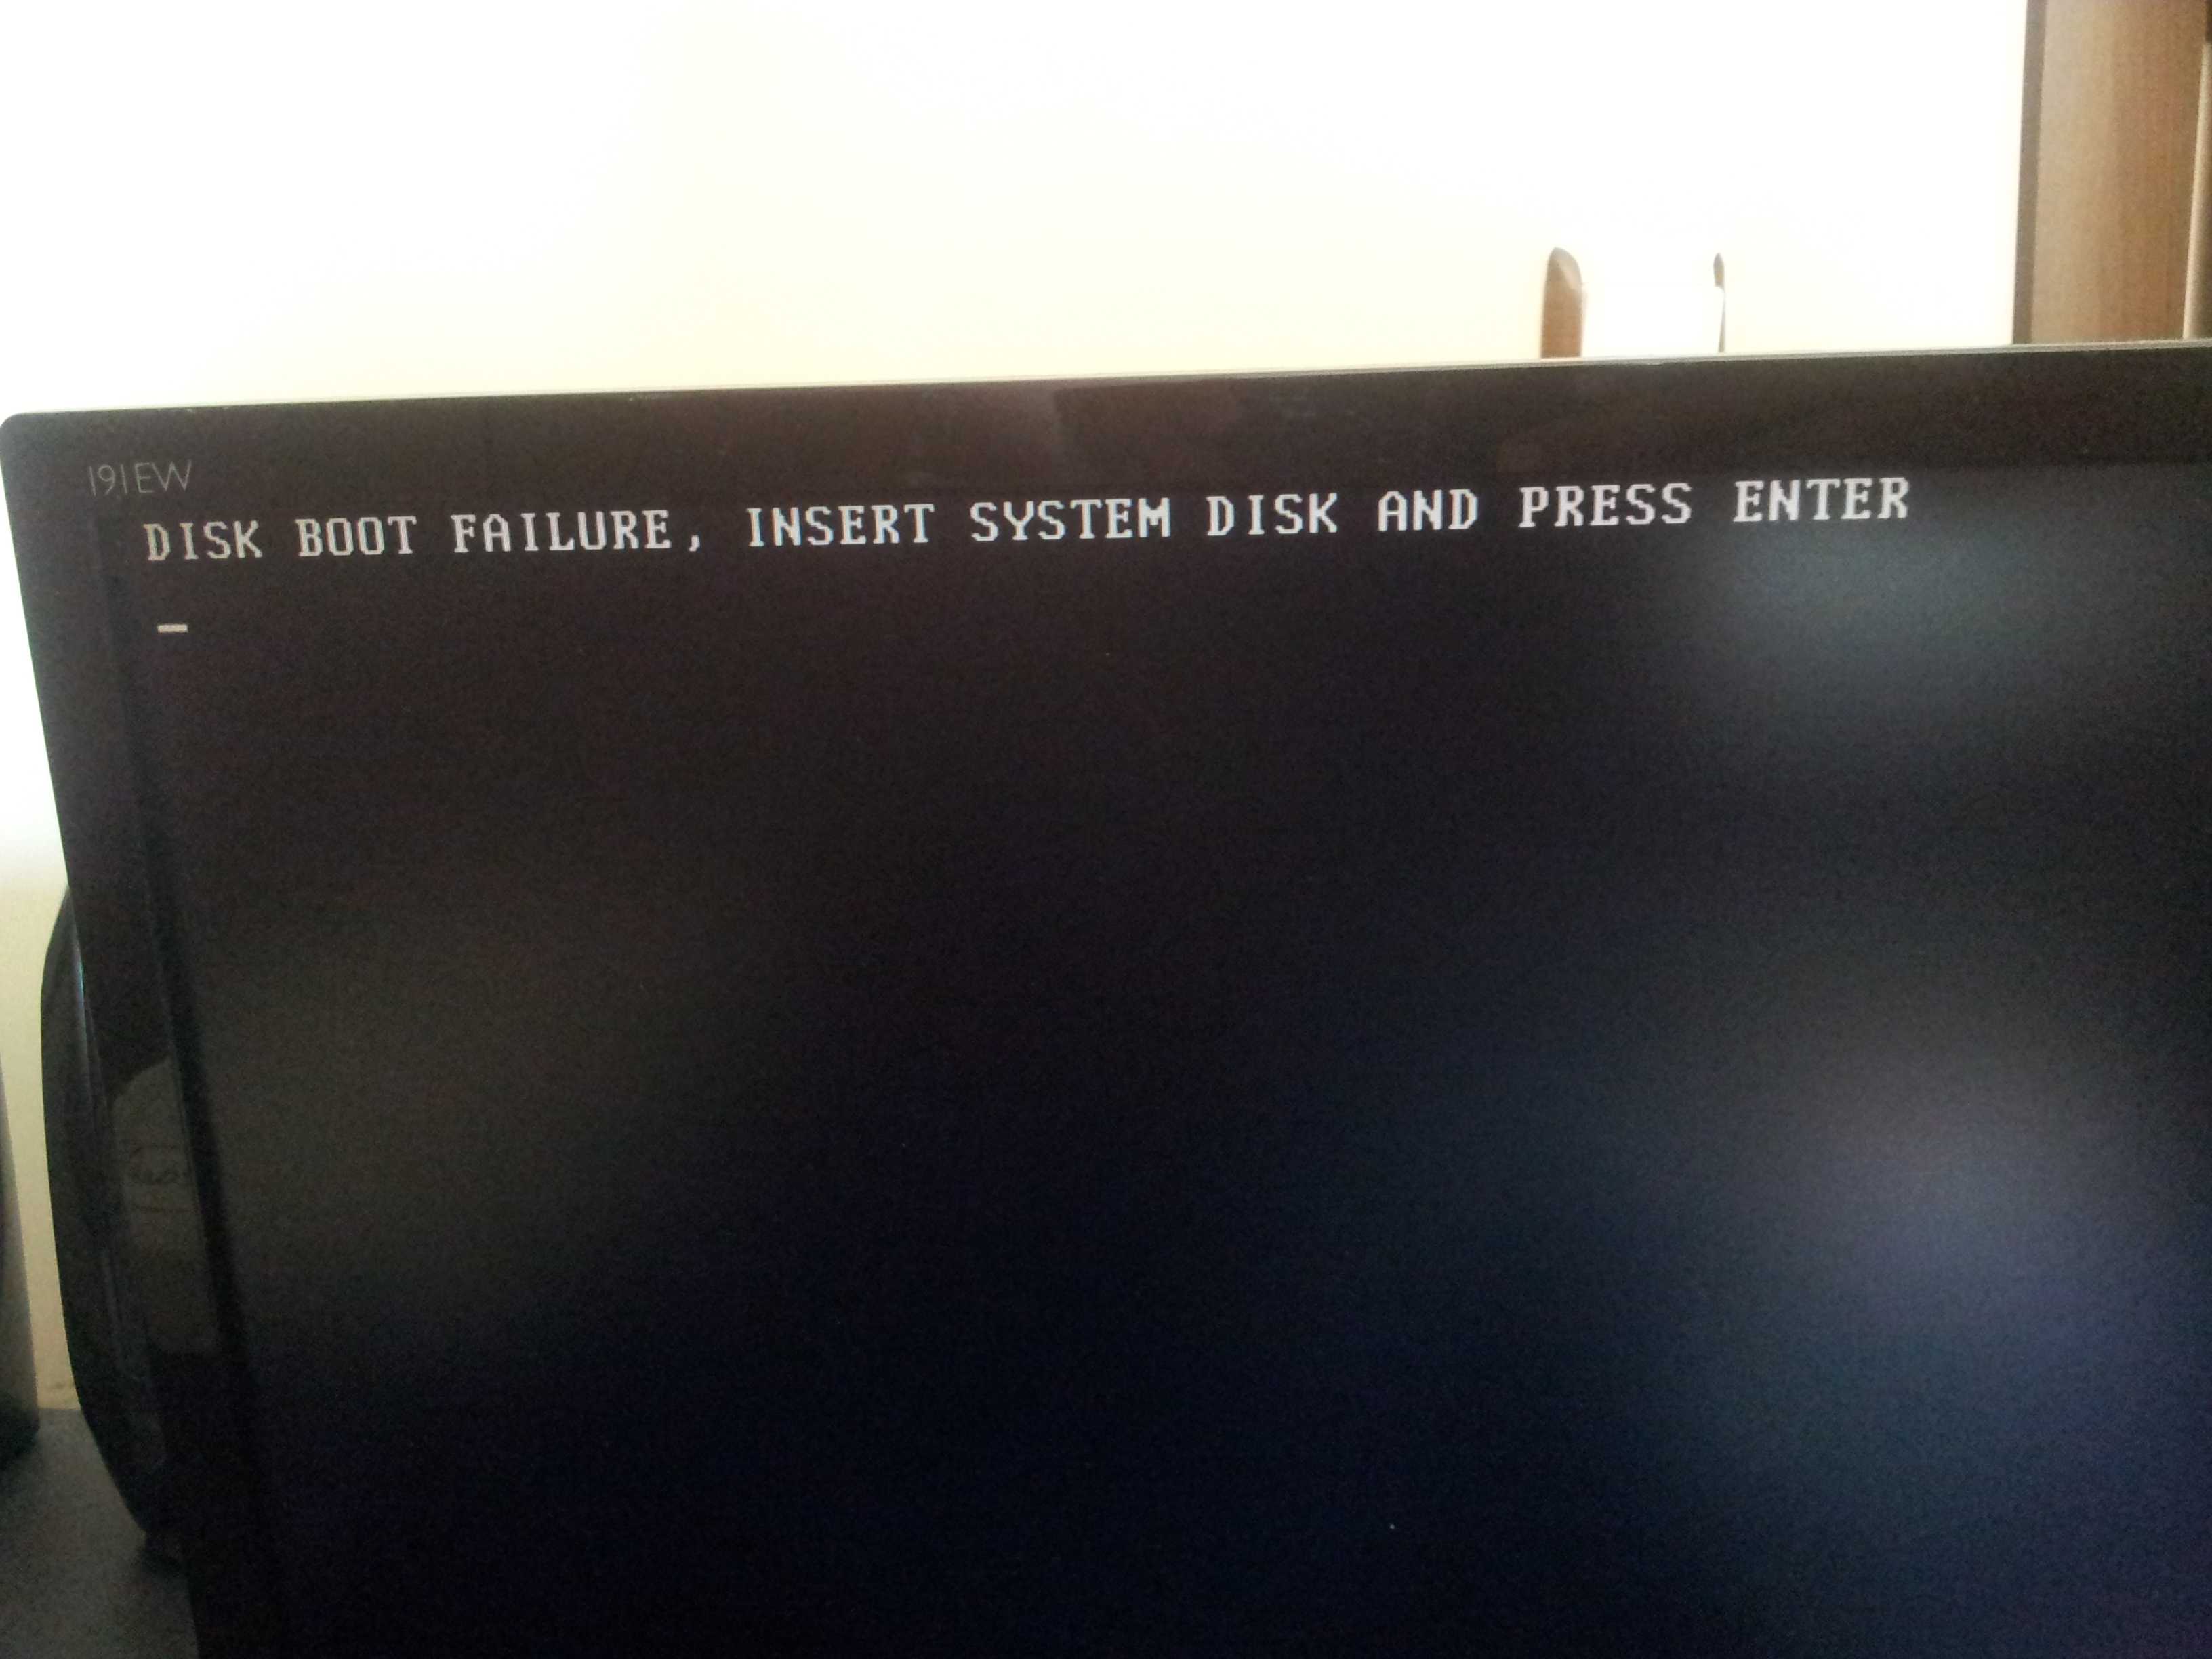 А как | как исправить ошибку "disk boot failure insert system disk" при загрузке пк | akak.ru